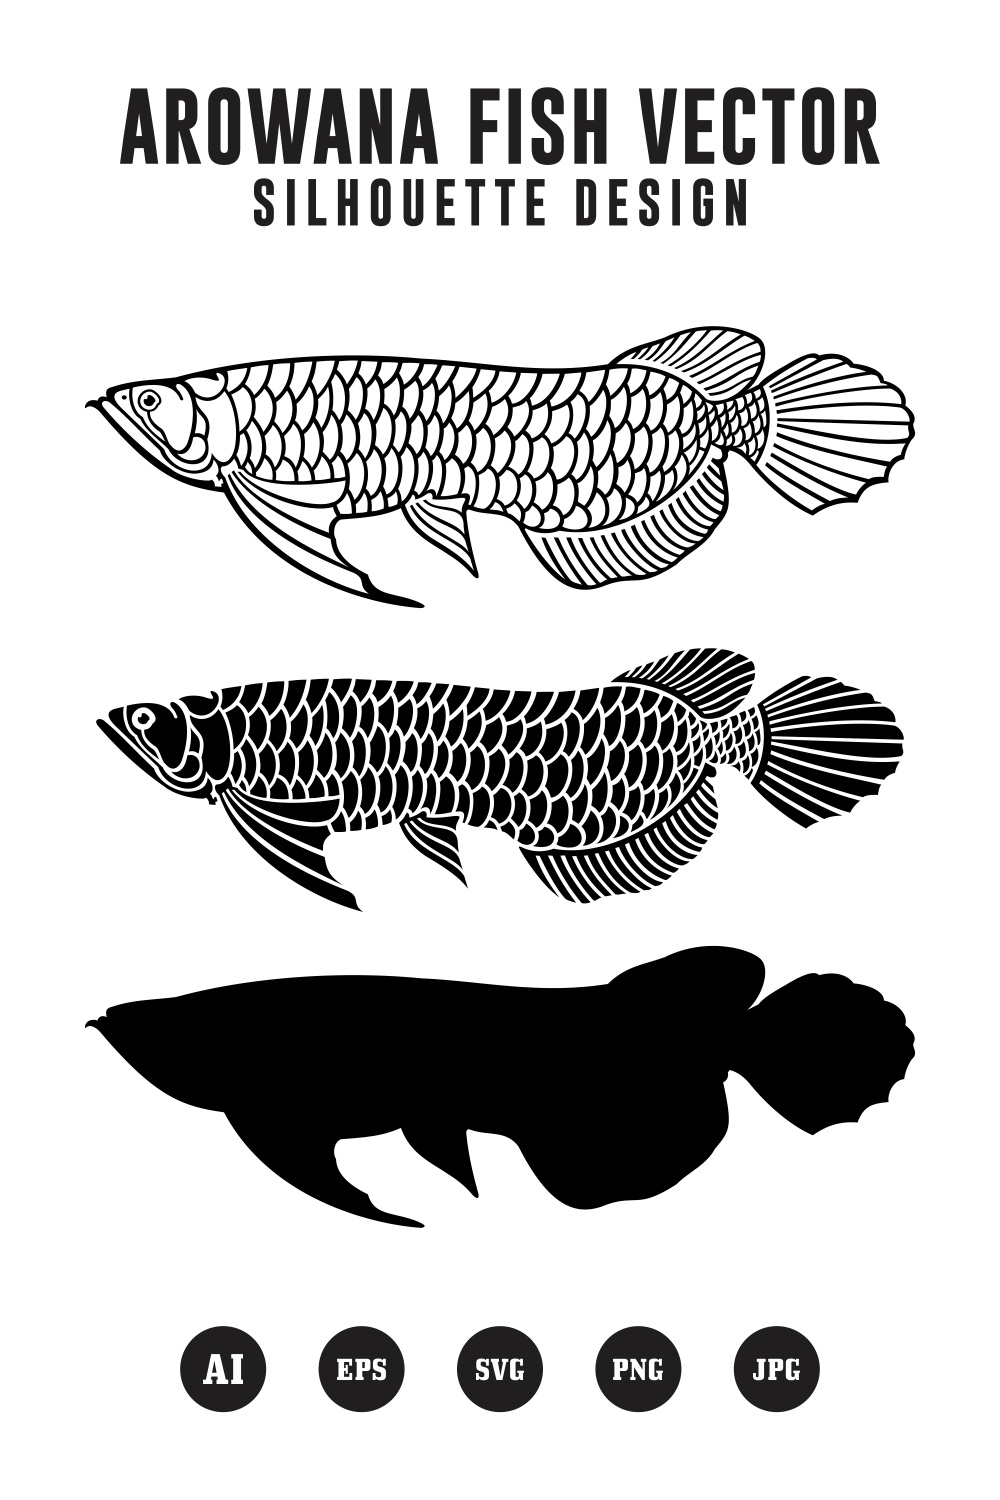 Set Arowana fish vector silhouette design - $4 pinterest preview image.